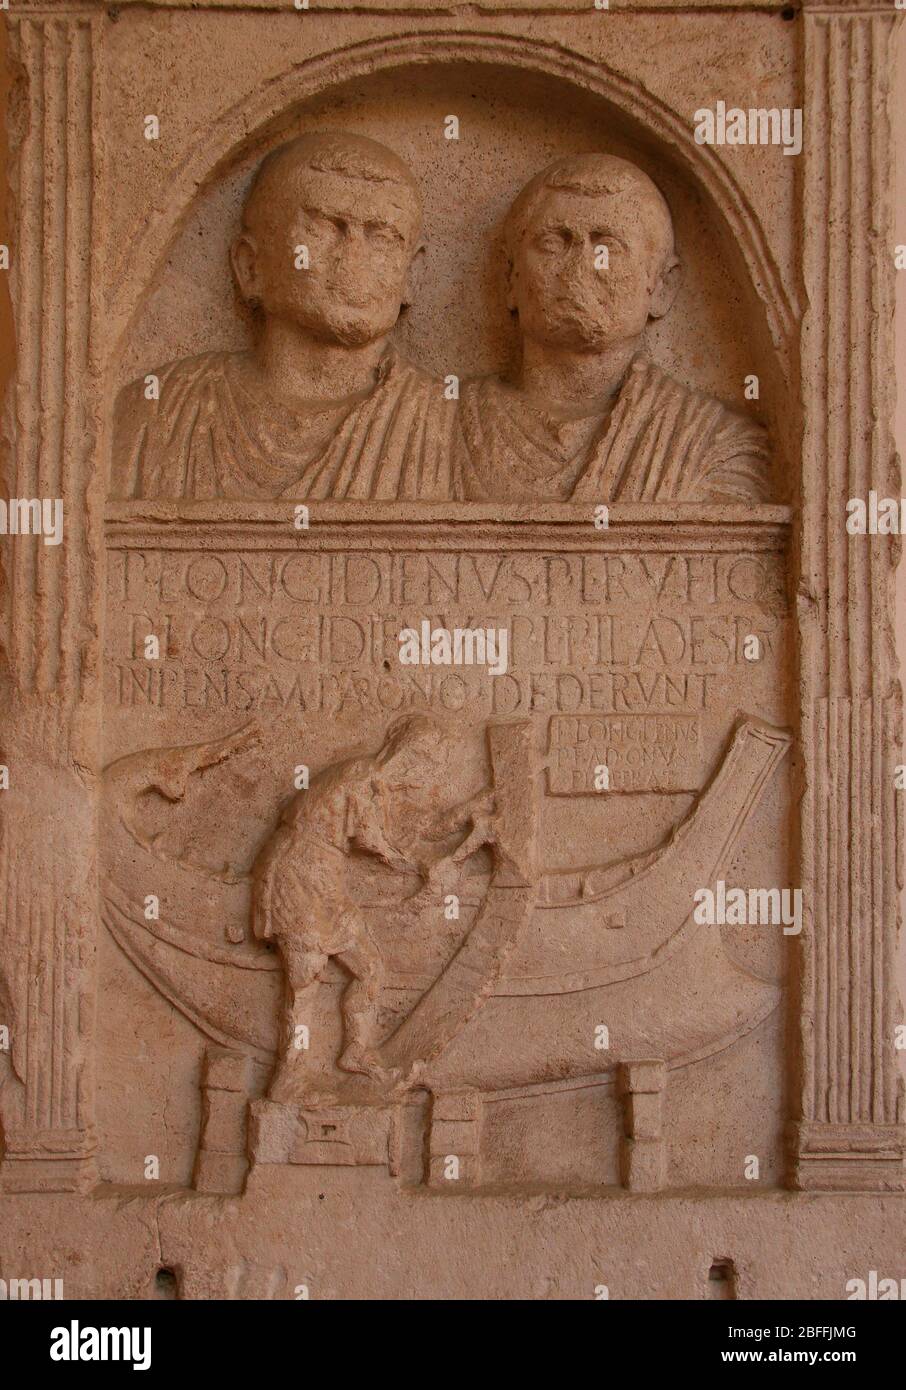 Funerary stele of Publius Longidienus.  Portraits and scene of shipbuilding. Limestone. 1st century AD. Ravenna. National Museum, Italy. Stock Photo